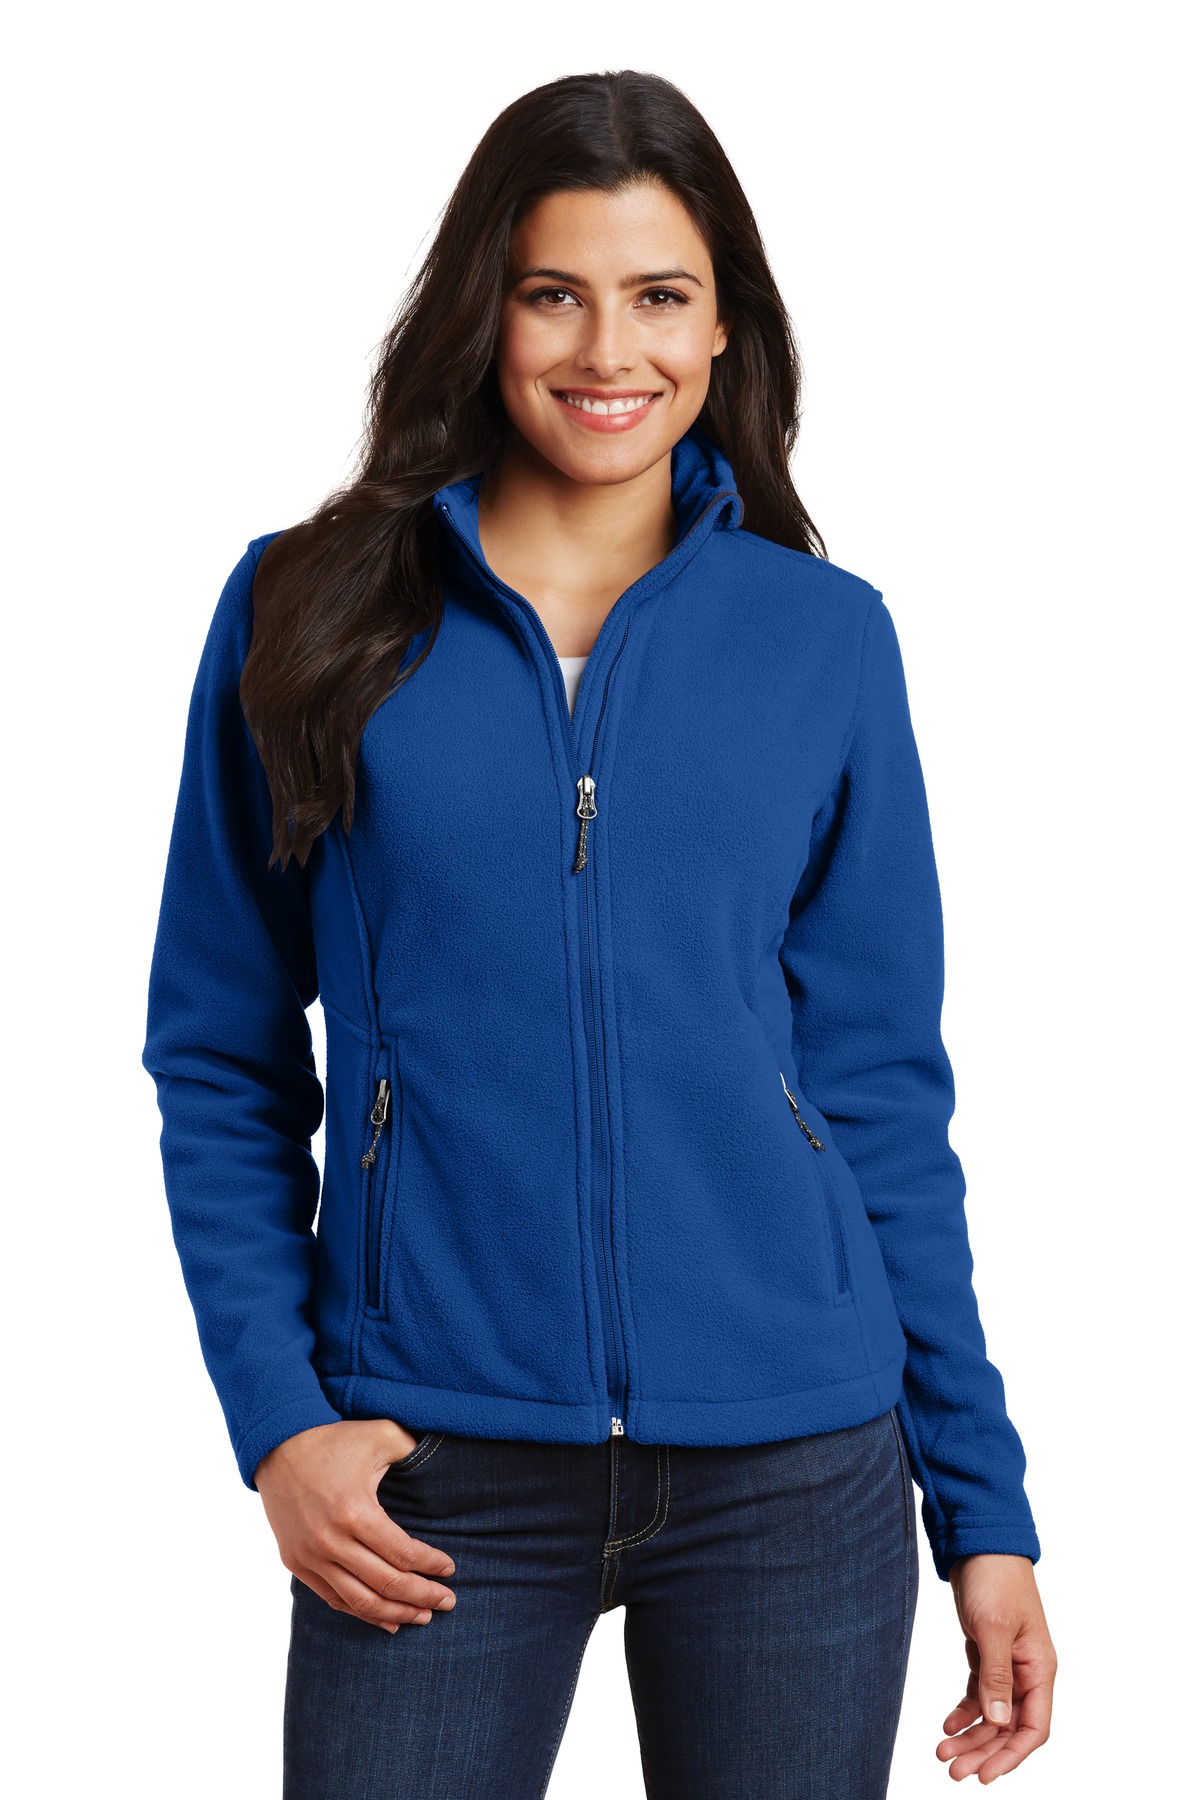 Port Authority Ladies Value Fleece Jacket - image 1 of 1